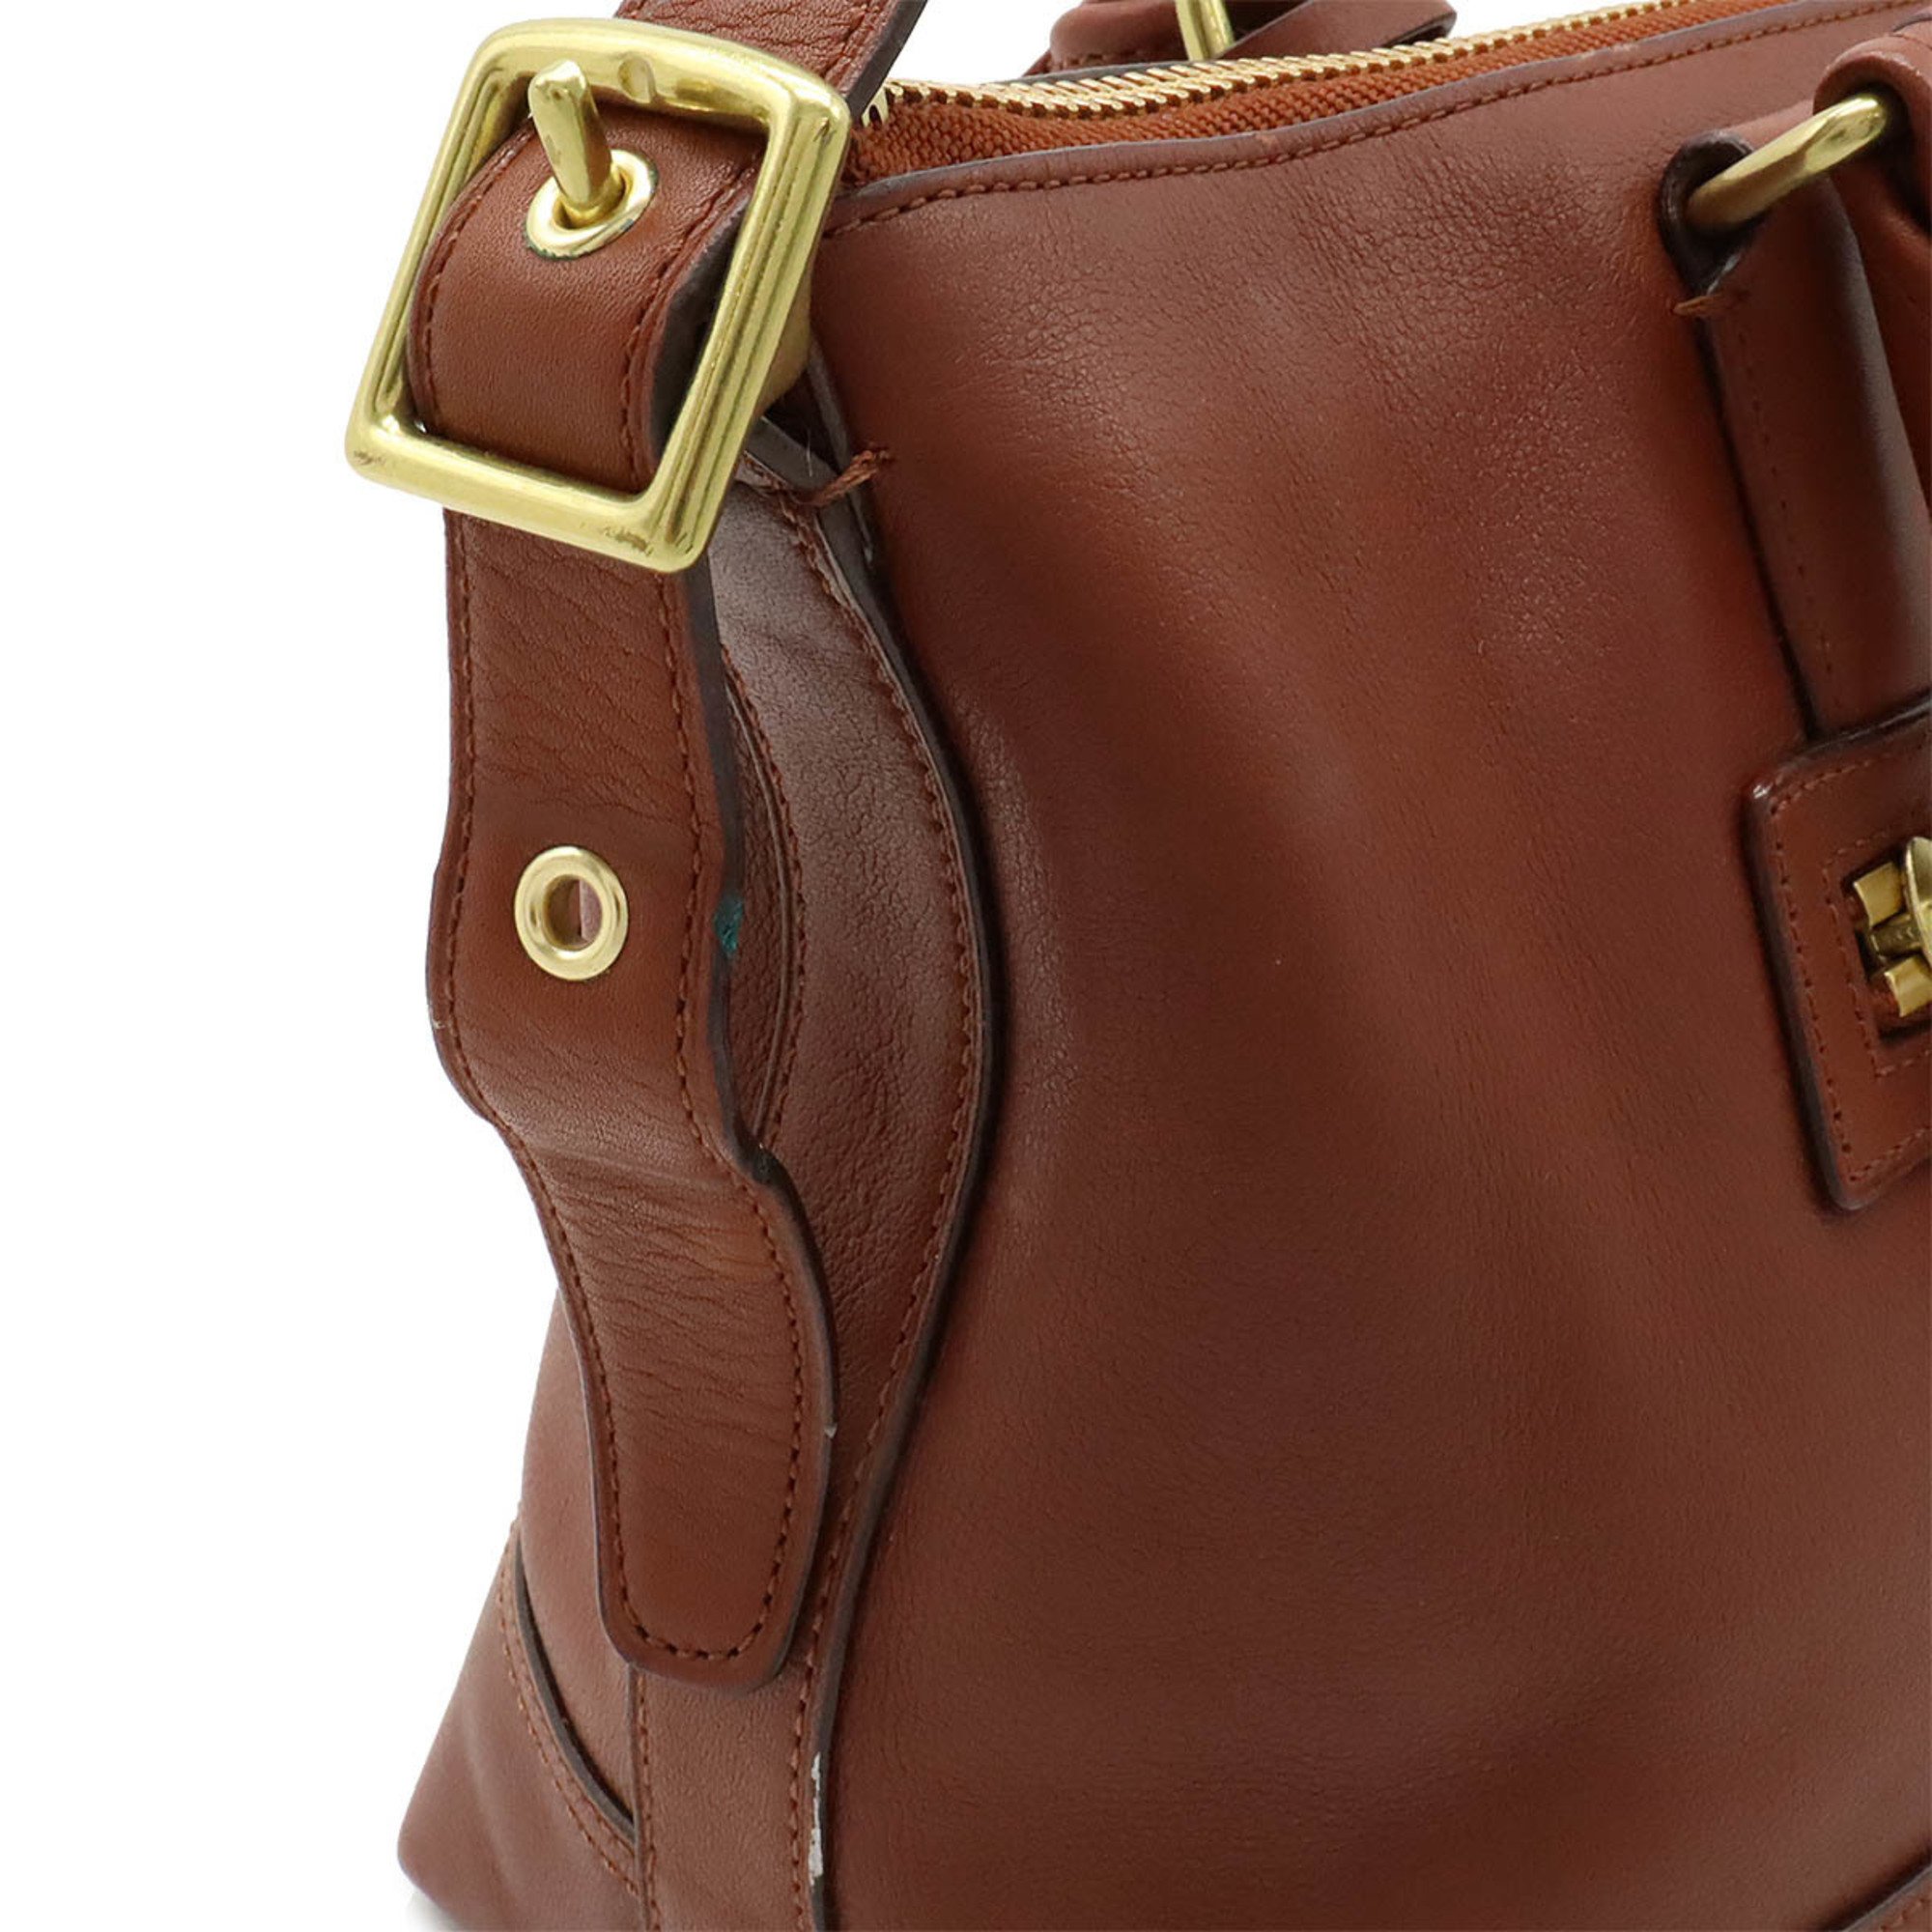 COACH Legacy Leather Molly Satchel Handbag Shoulder Bag Brown 21132